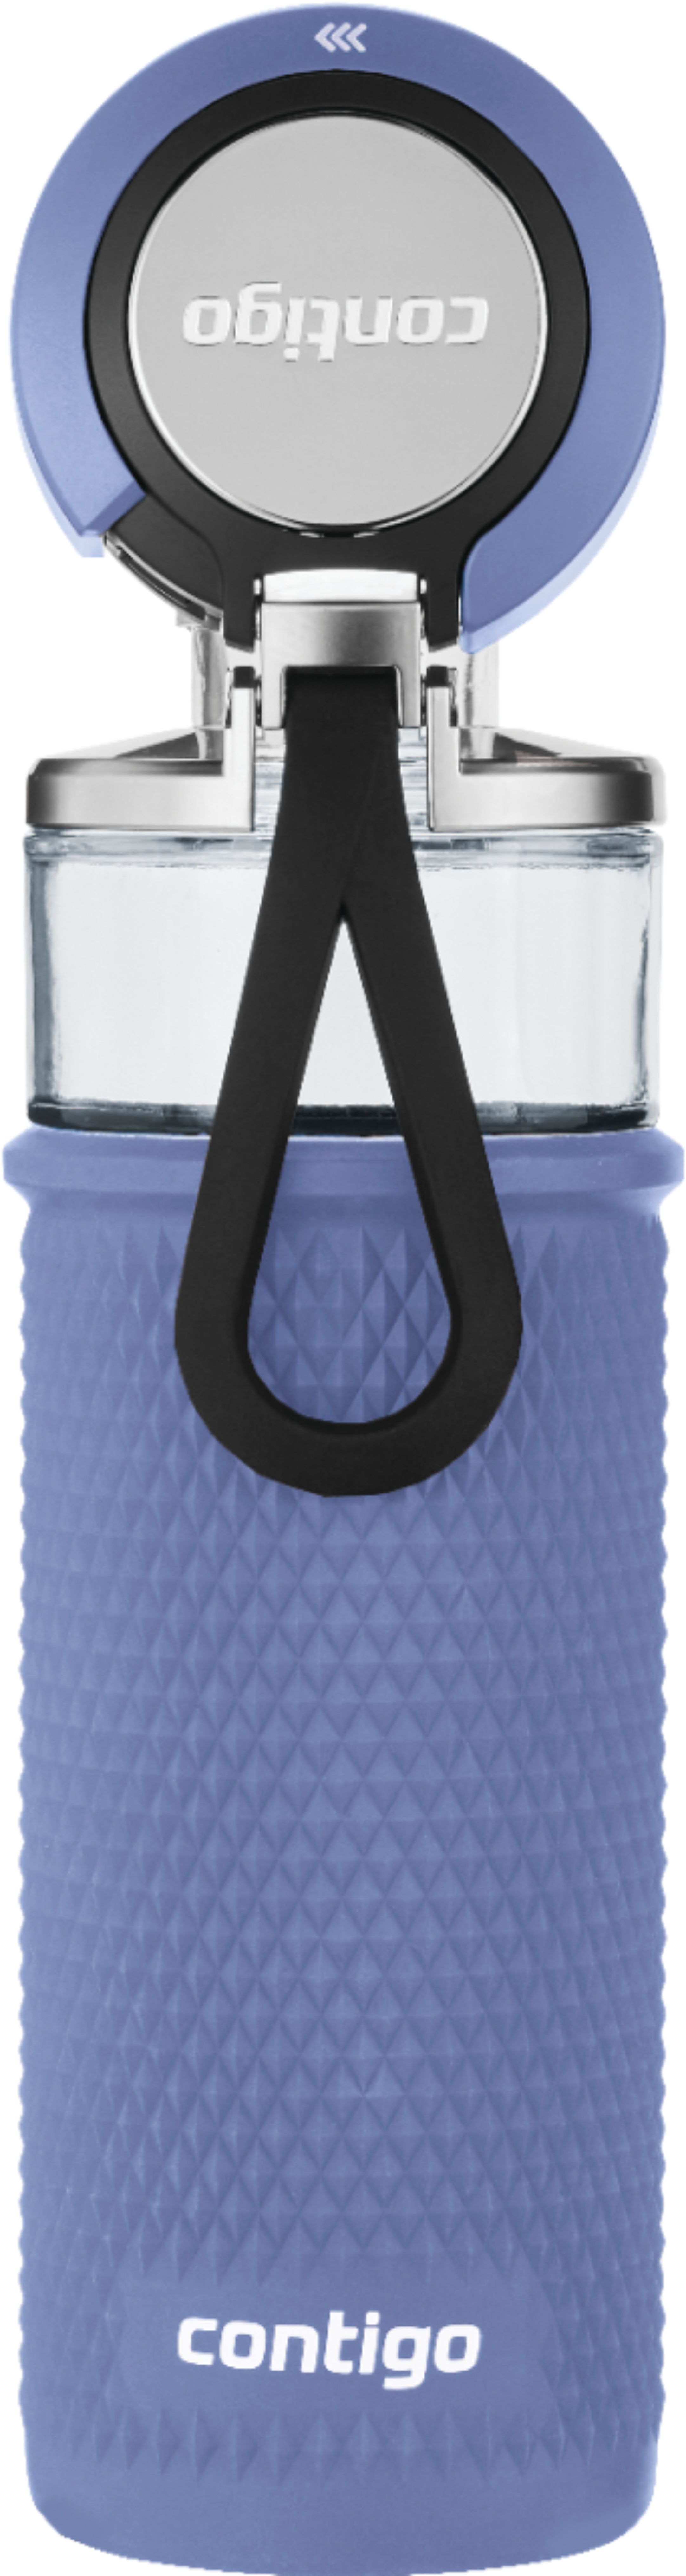 Best Buy: Contigo Glacier 20-Oz. Insulated Water Bottle Black/Electric Blue  71948